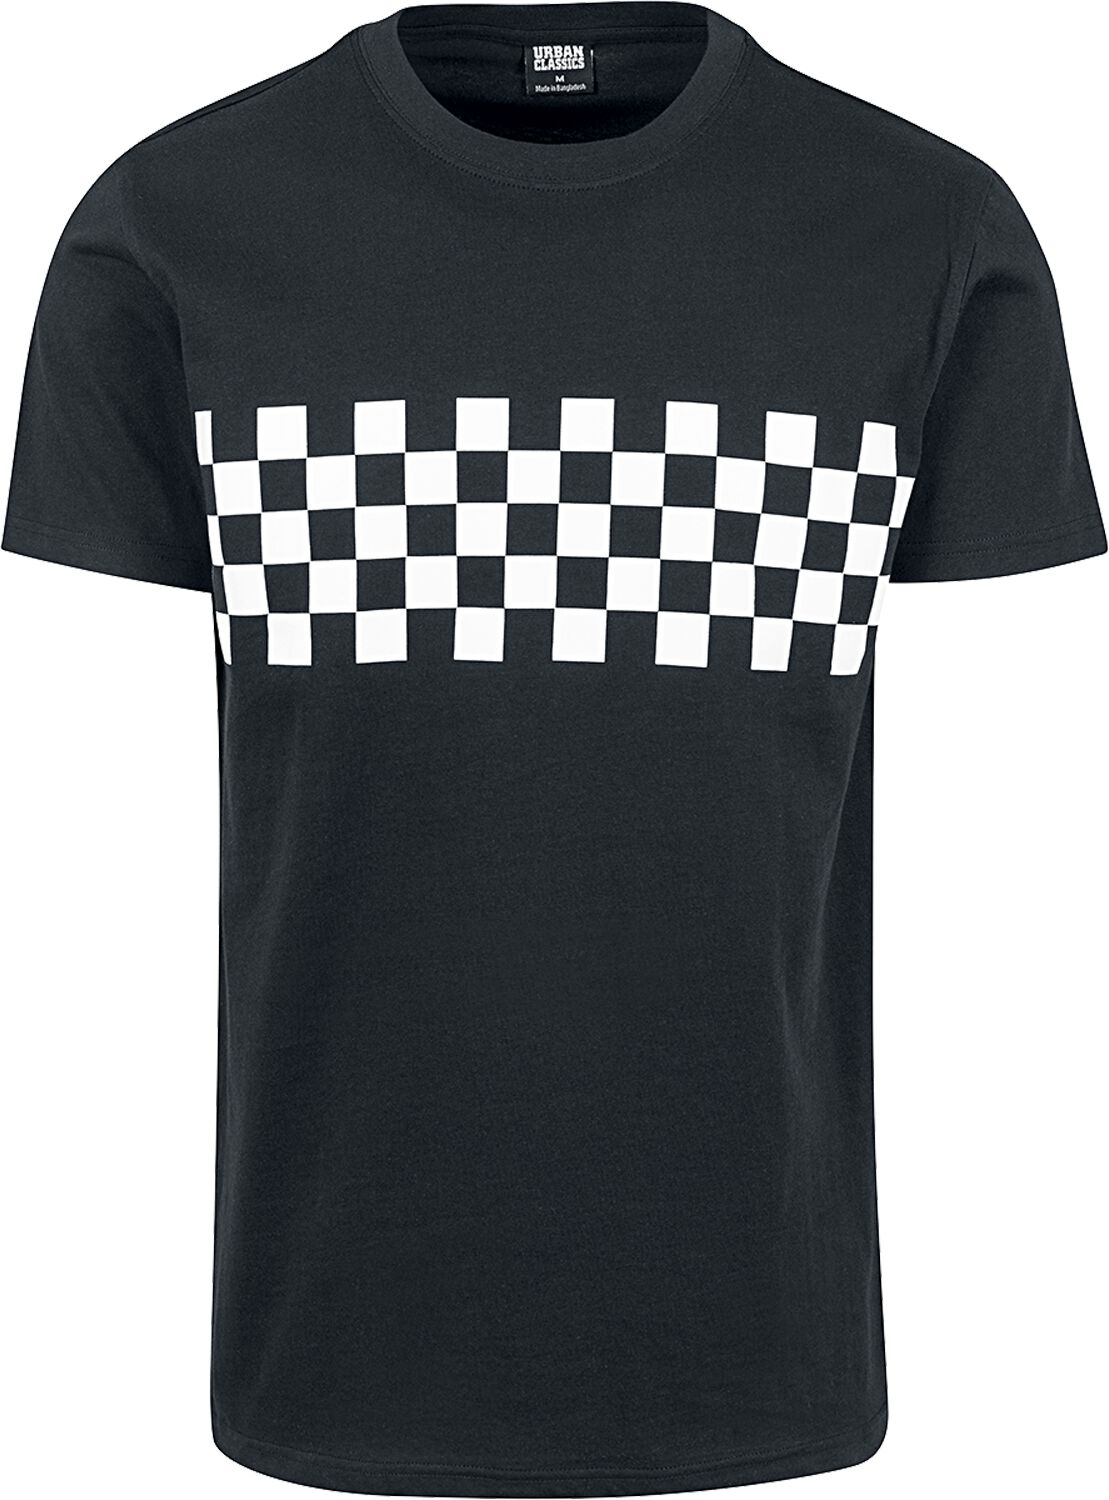 Urban Classics Check Panel Tee T-Shirt schwarz in 3XL